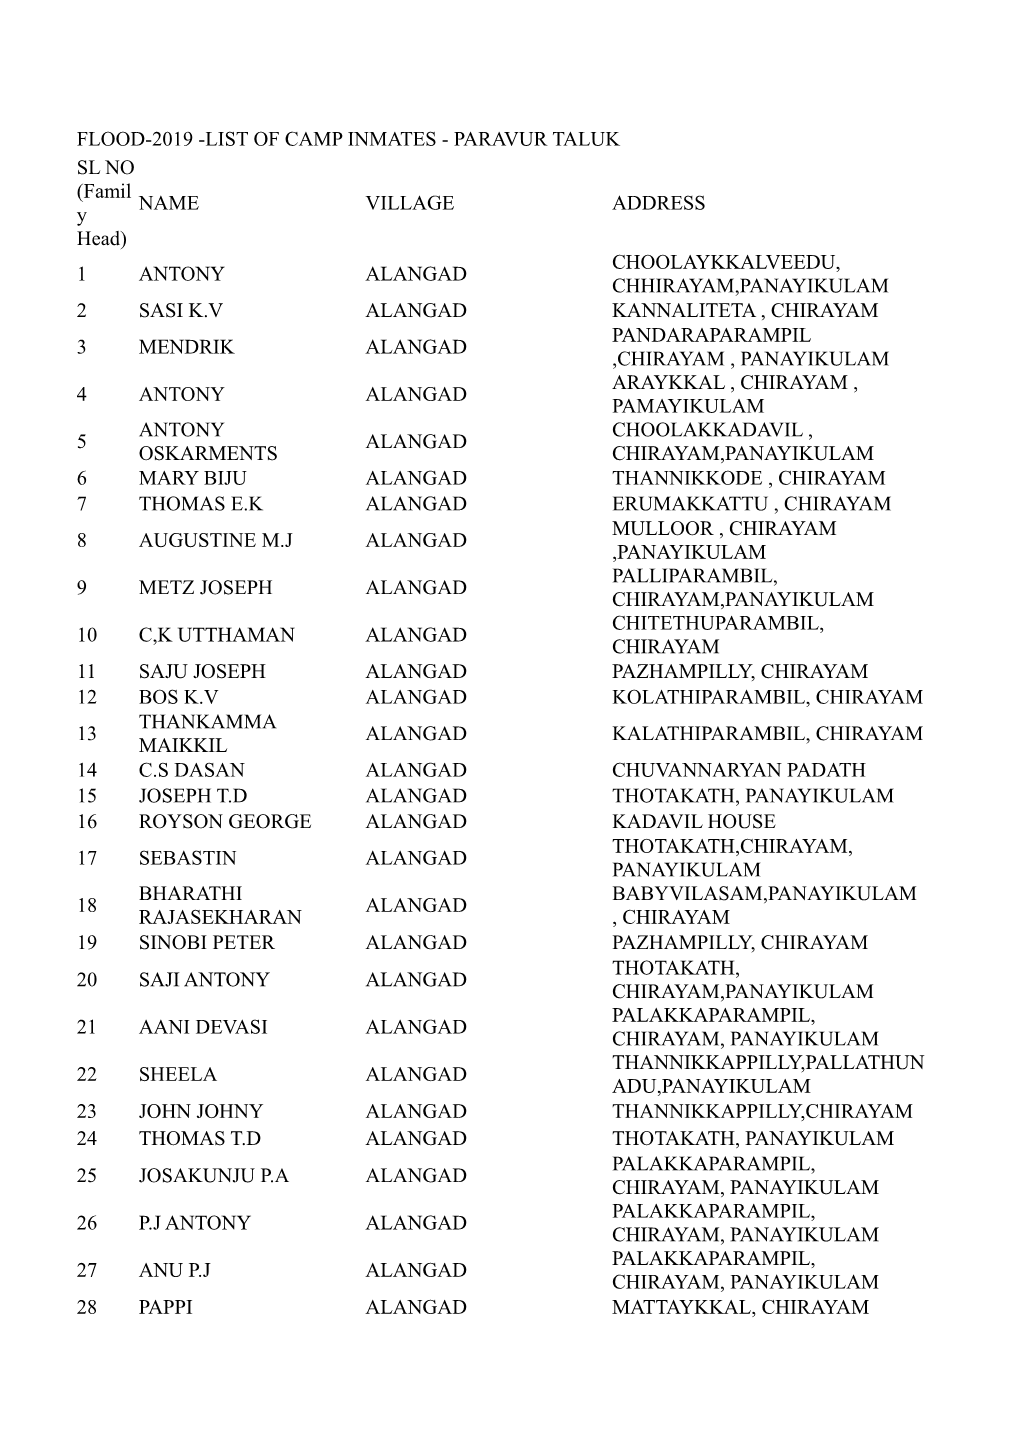 Flood-2019 -List of Camp Inmates